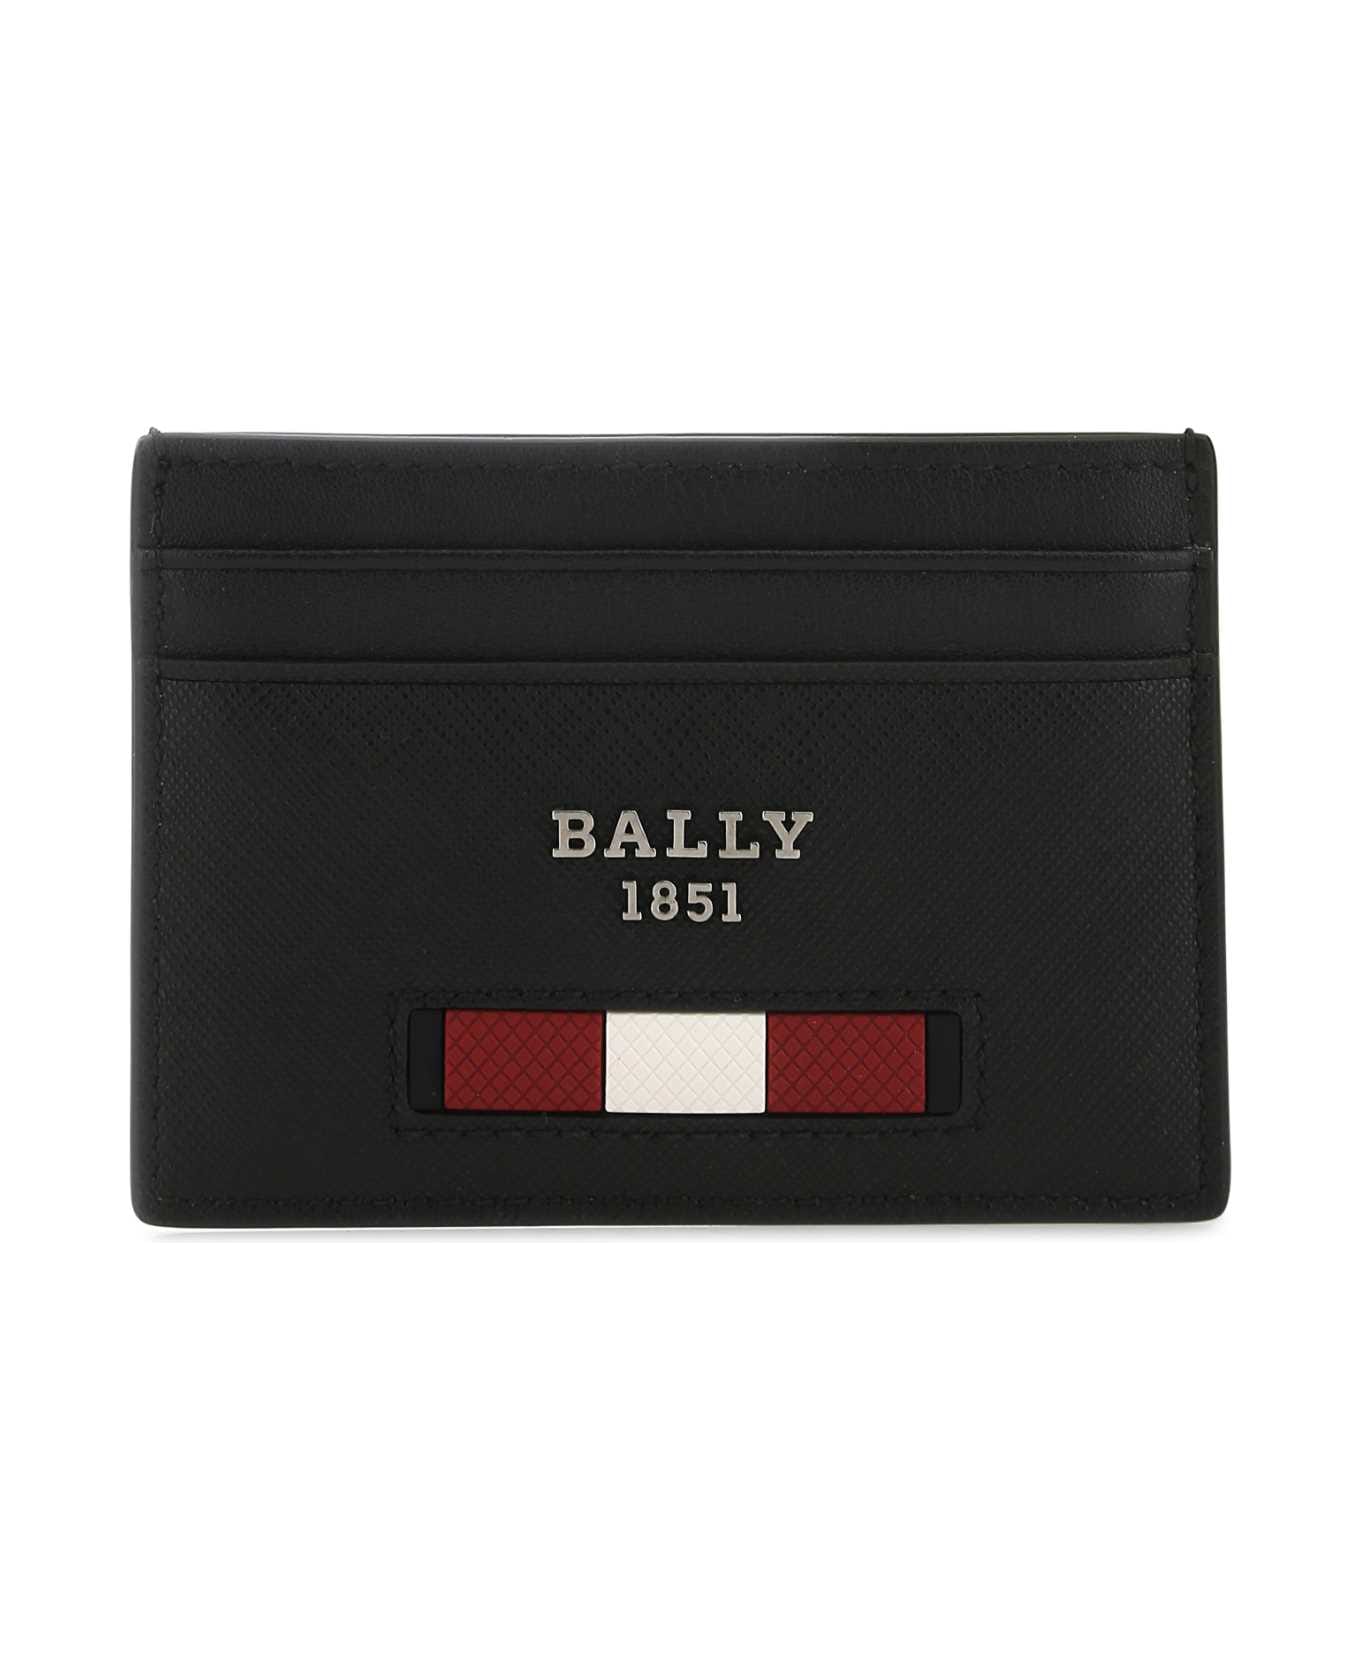 Bally Black Leather Card Holder - Black 財布